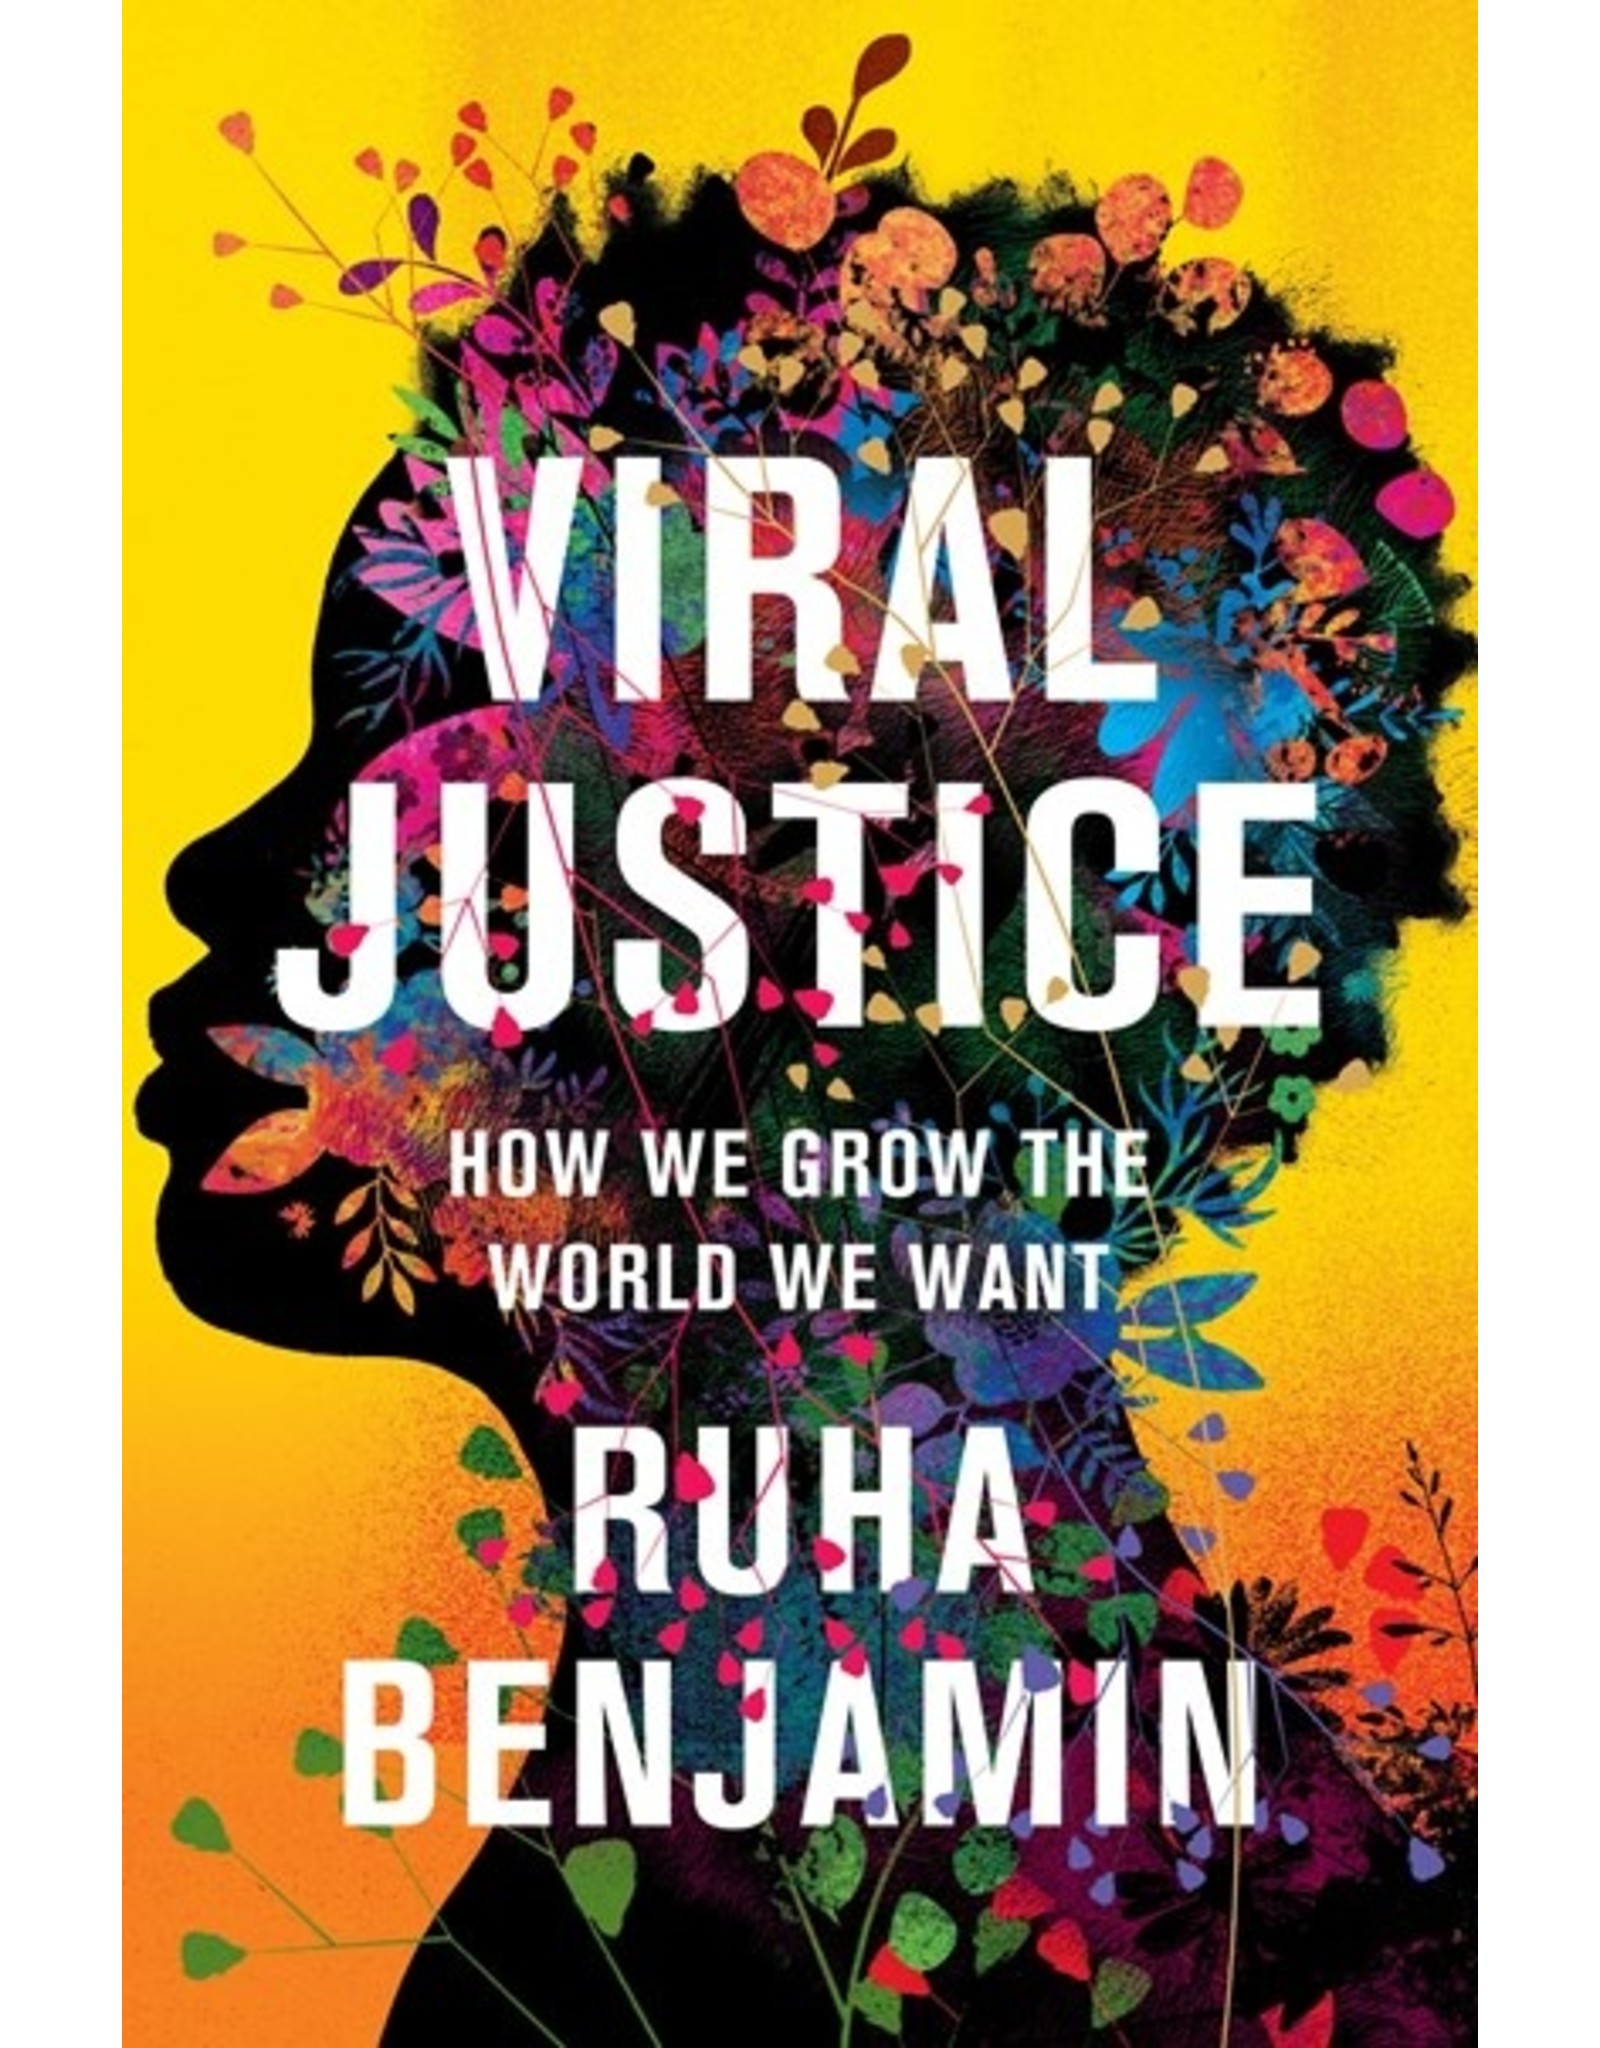 Books Viral Justice by Ruha Benjamin